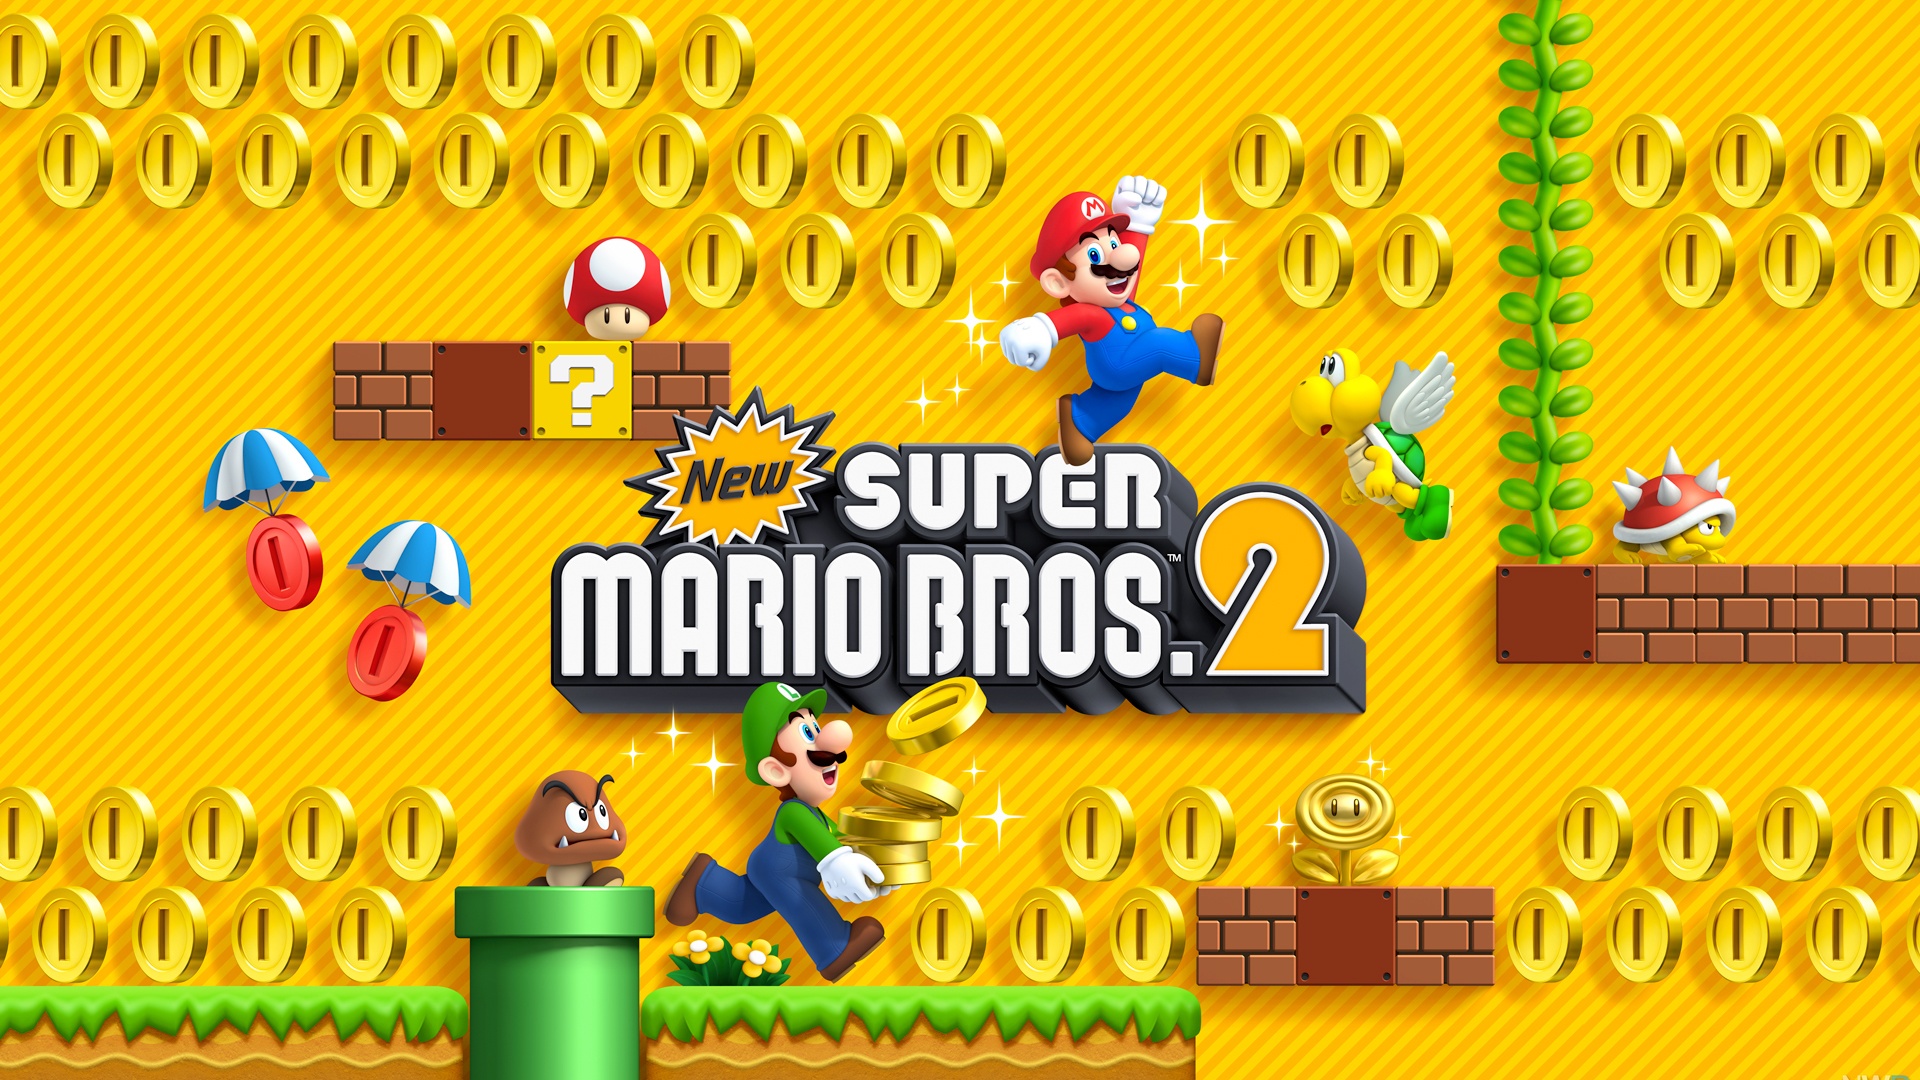 New Super Mario Bros HD Wallpaper Background Image